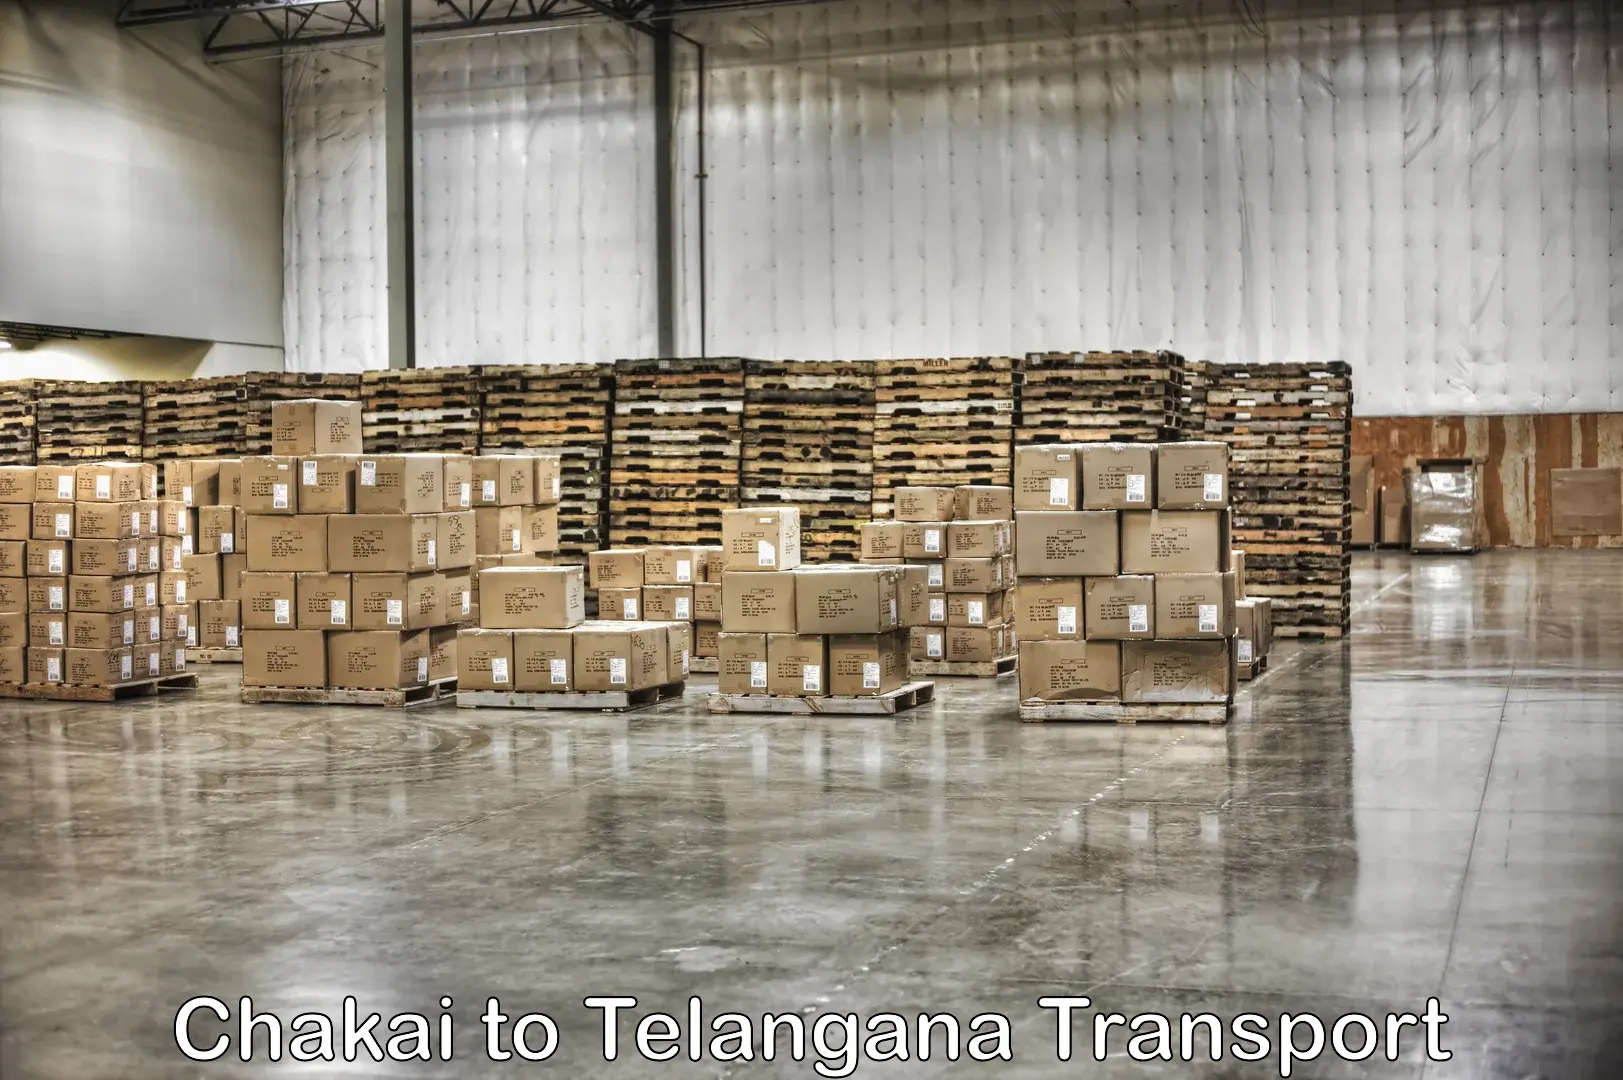 Truck transport companies in India in Chakai to Warangal